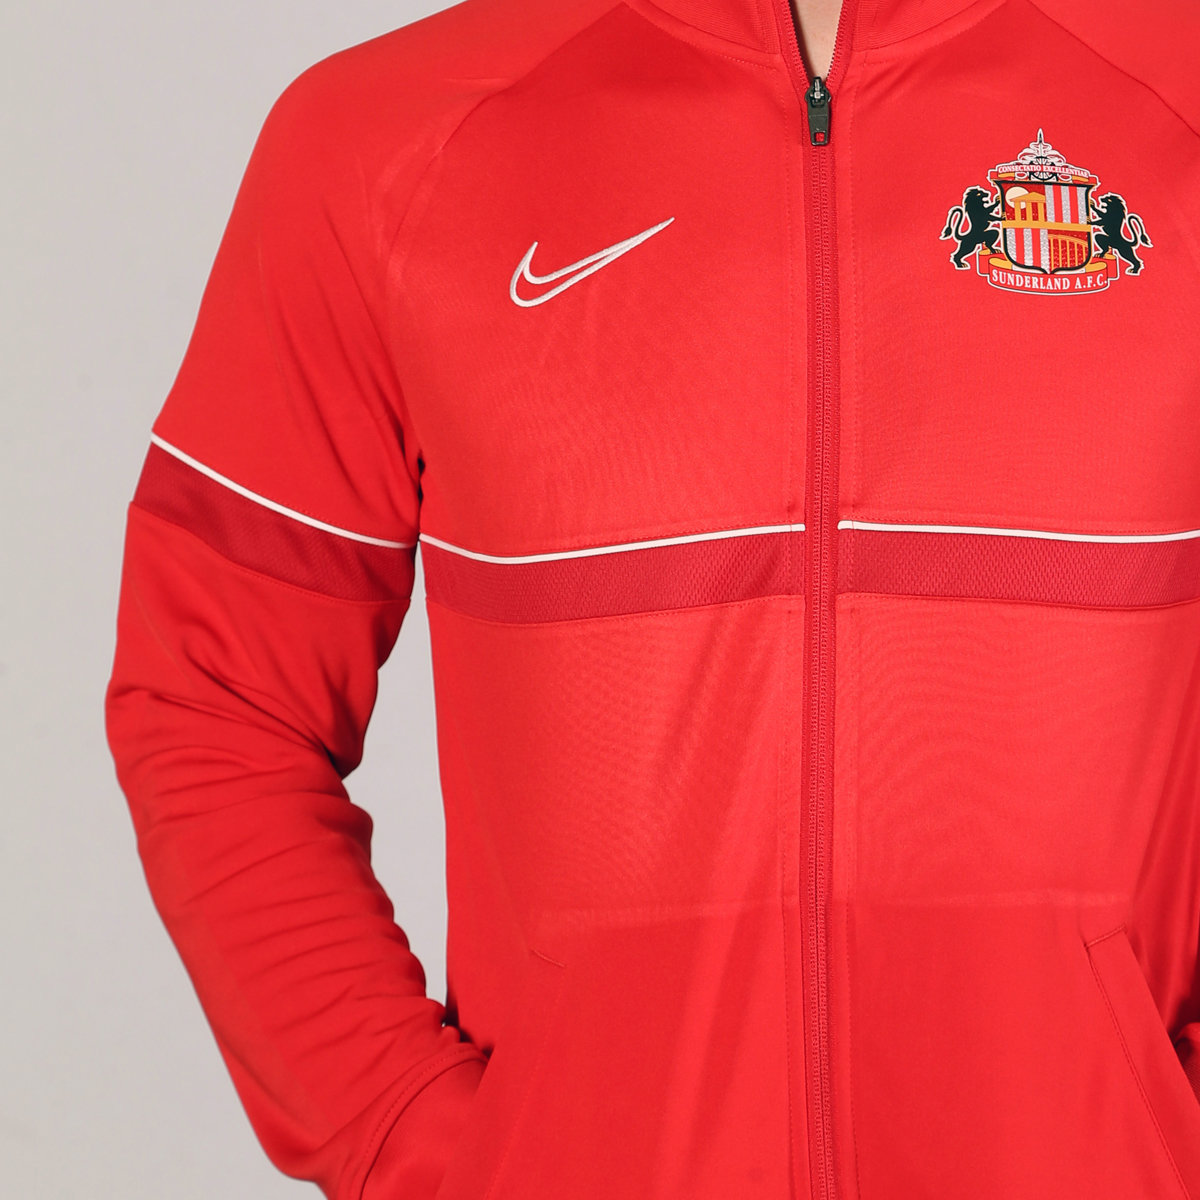 Buy the 21-22 Nike Track Jacket online at Sunderland AFC Store